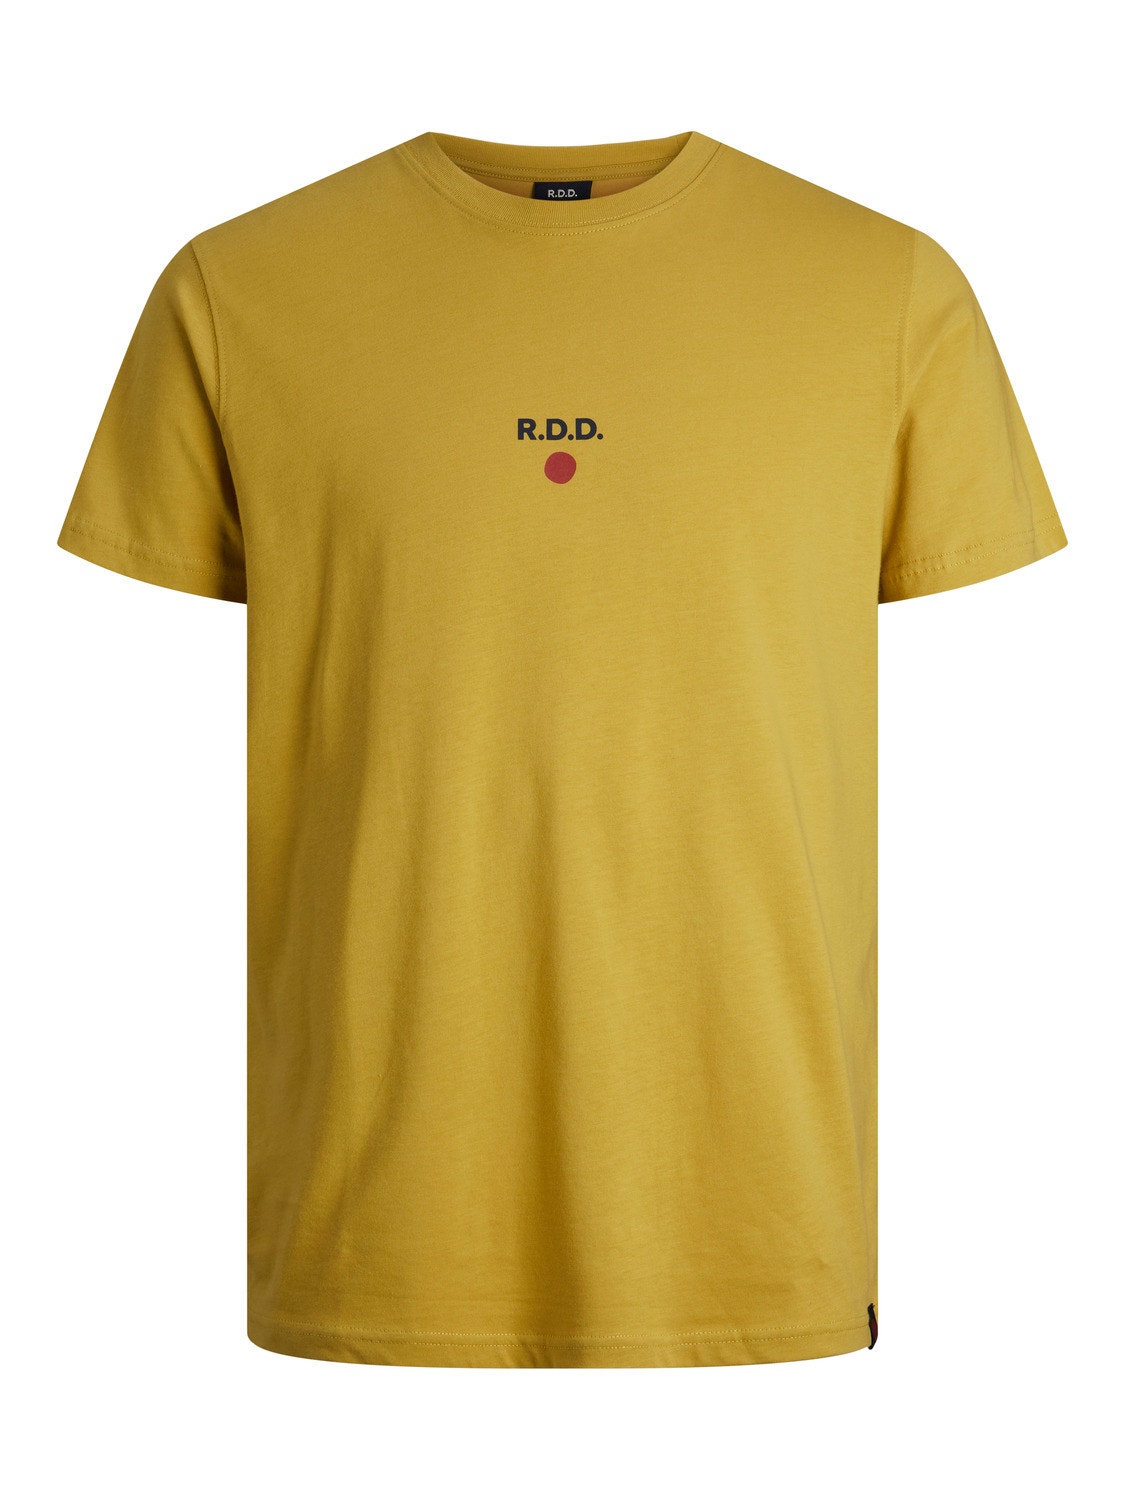 Jack & Jones RDD Printed Crew neck T-shirt -Antique Gold - 12254550